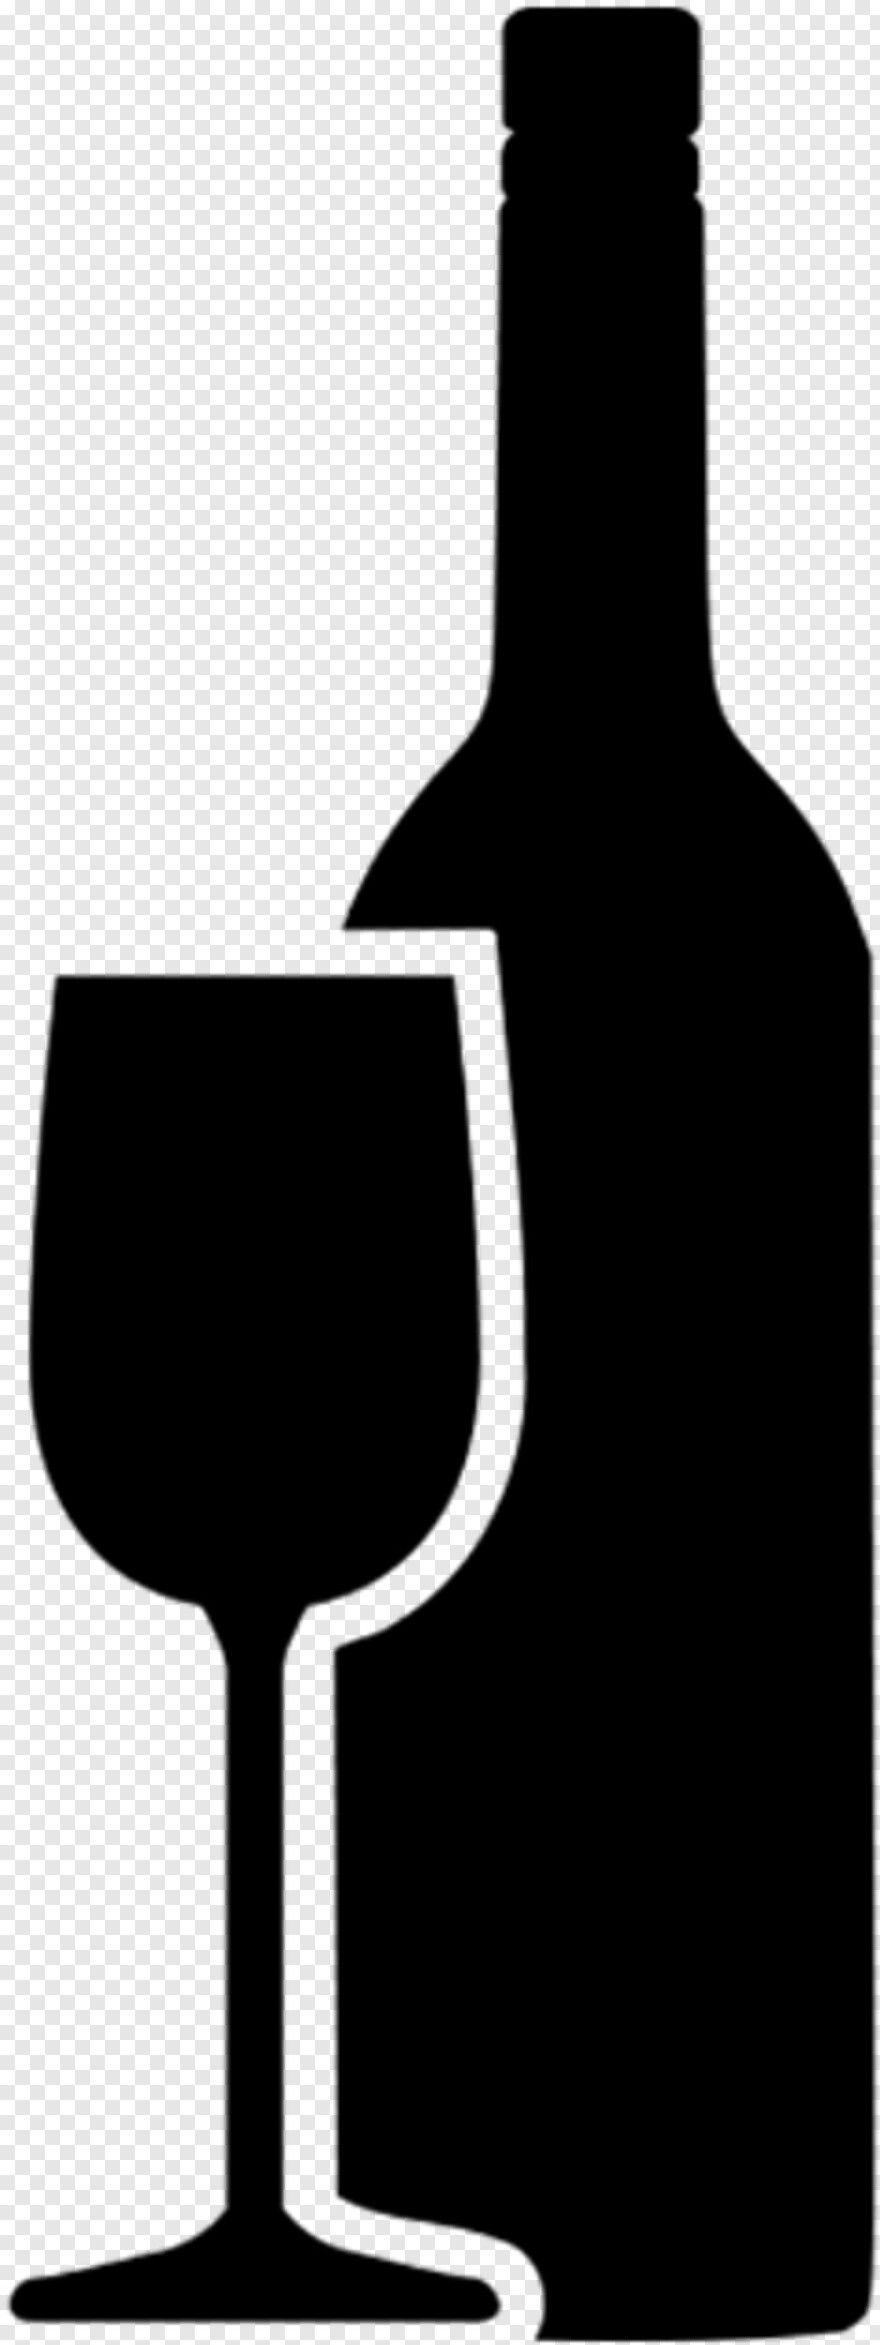 wine-glass-icon # 326830